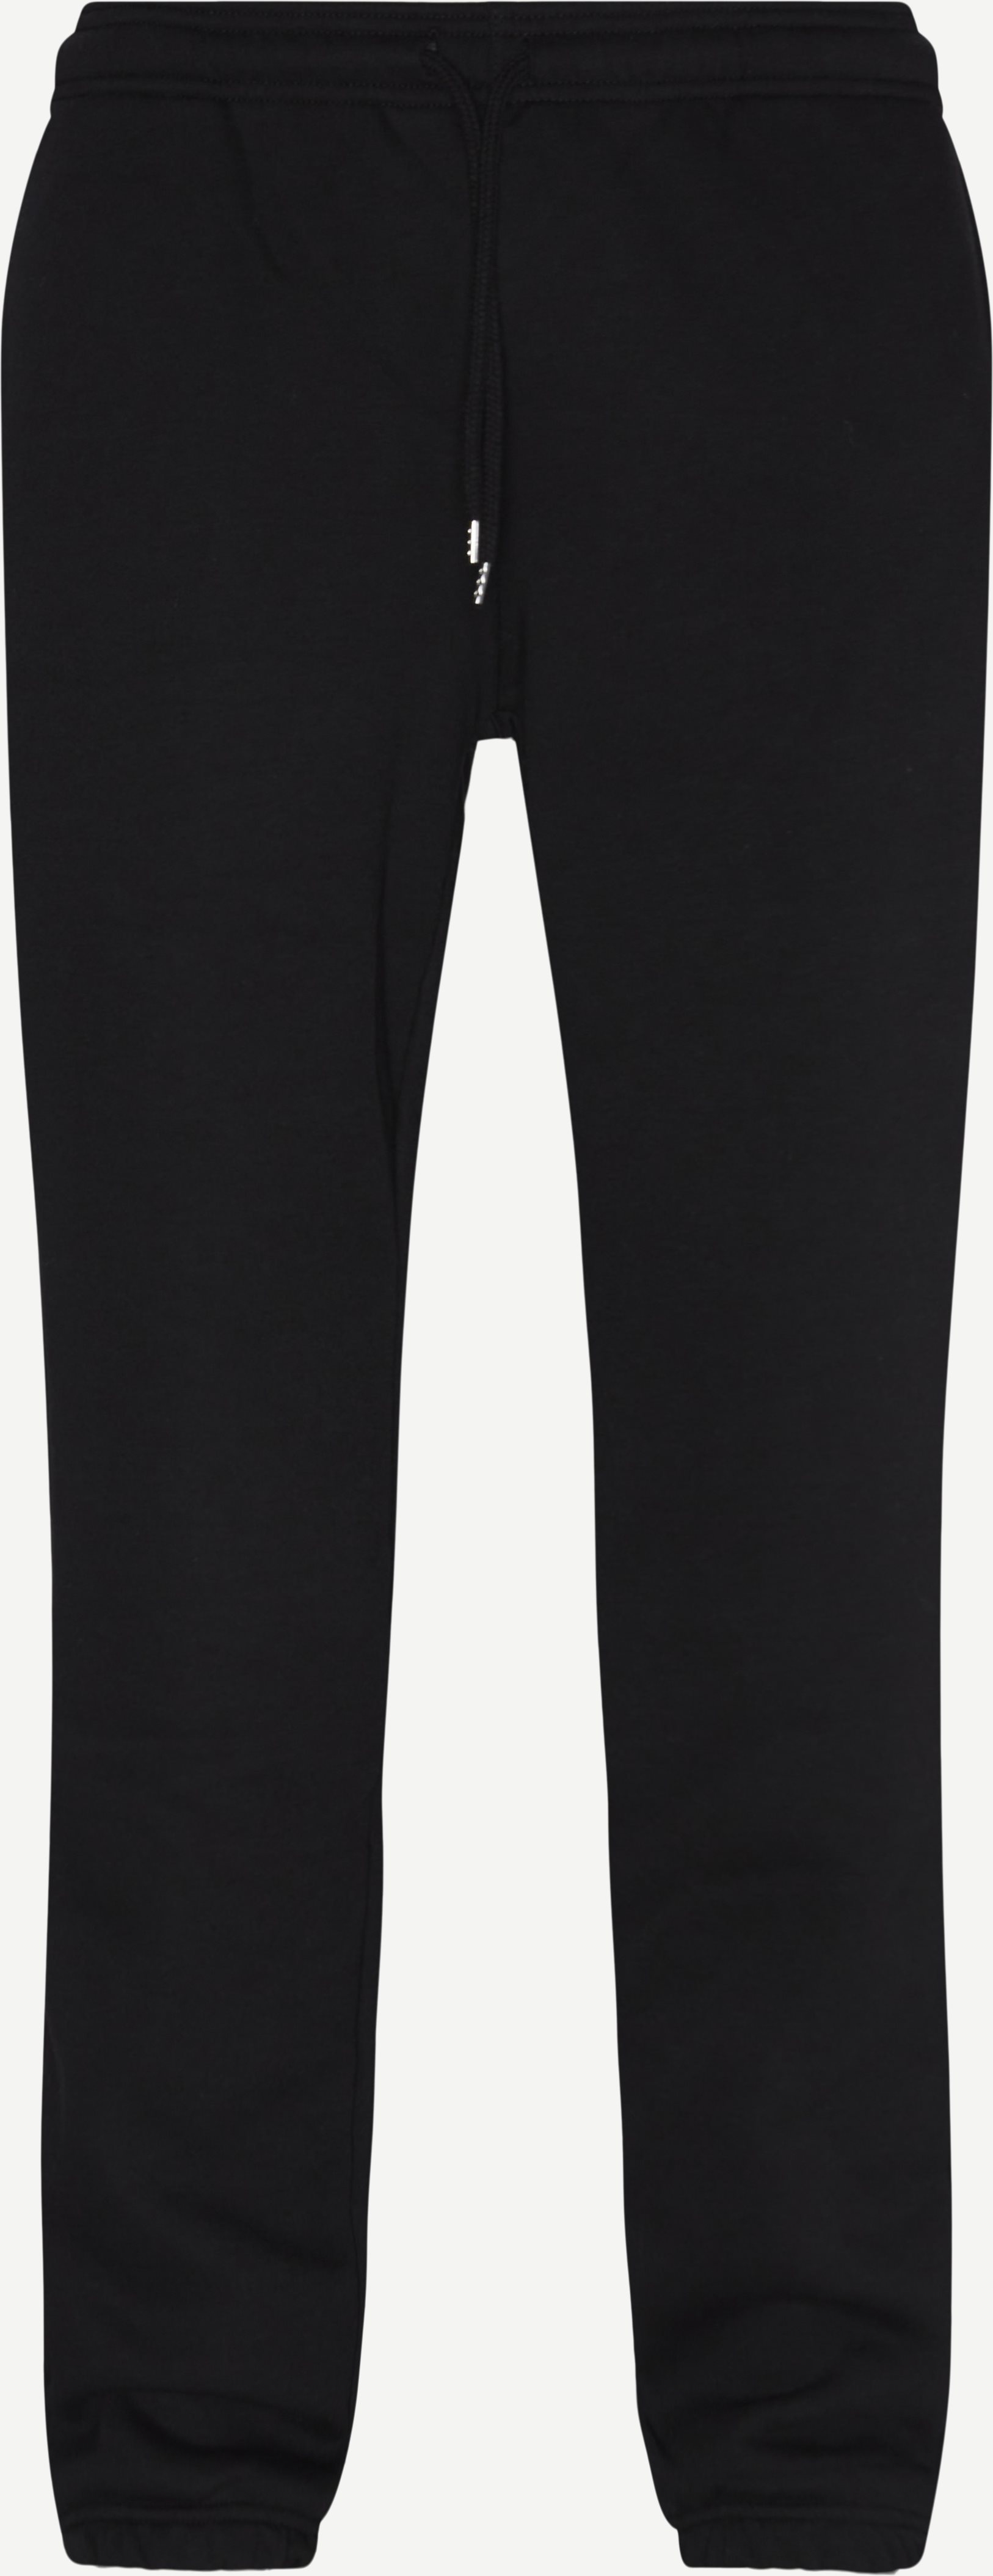 Iceland Trousers GRANADA Black